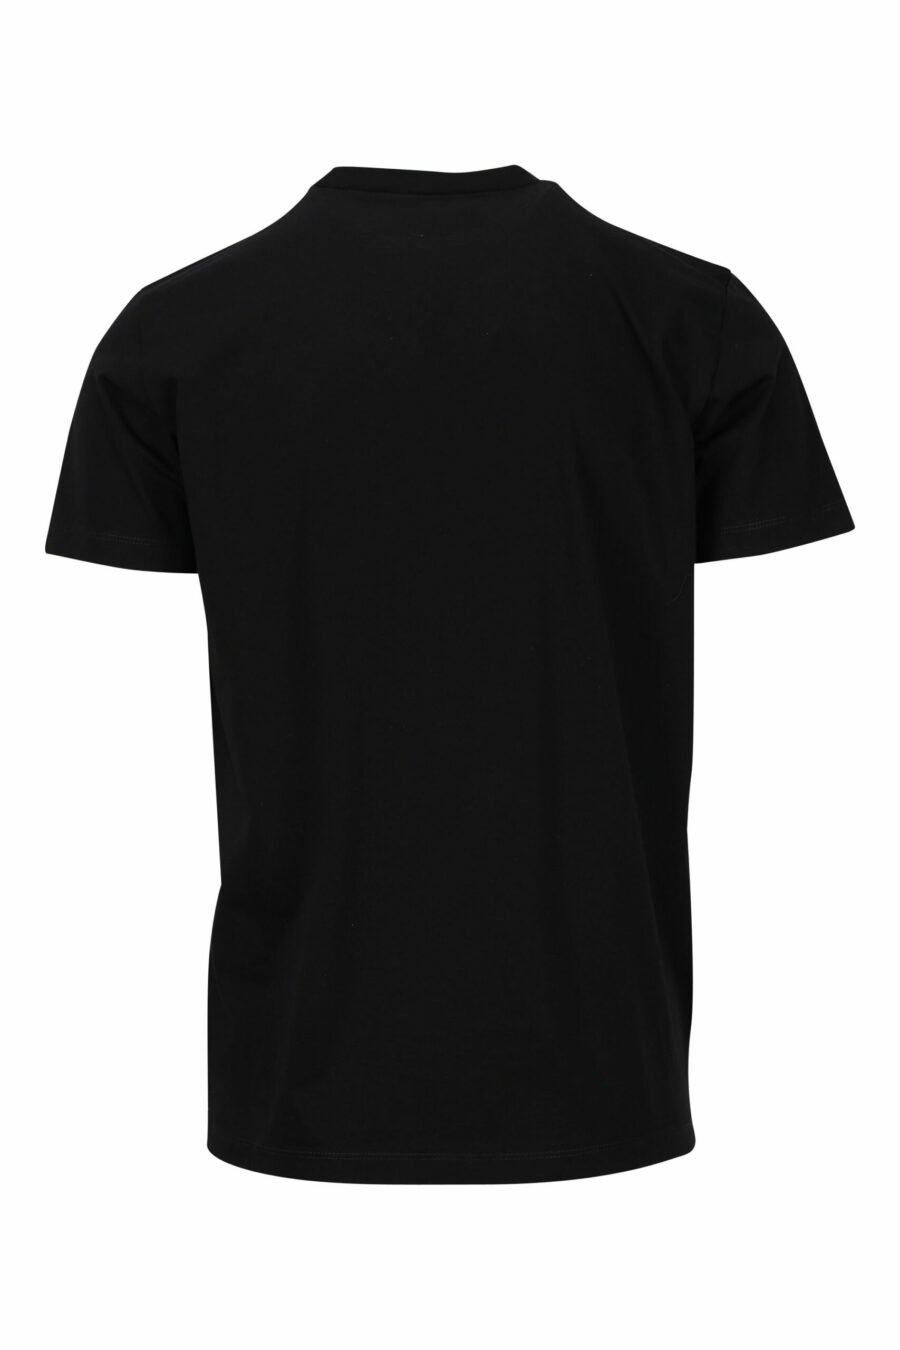 T-shirt noir avec maxilogo bleu "college" - 8054148086510 1 scaled